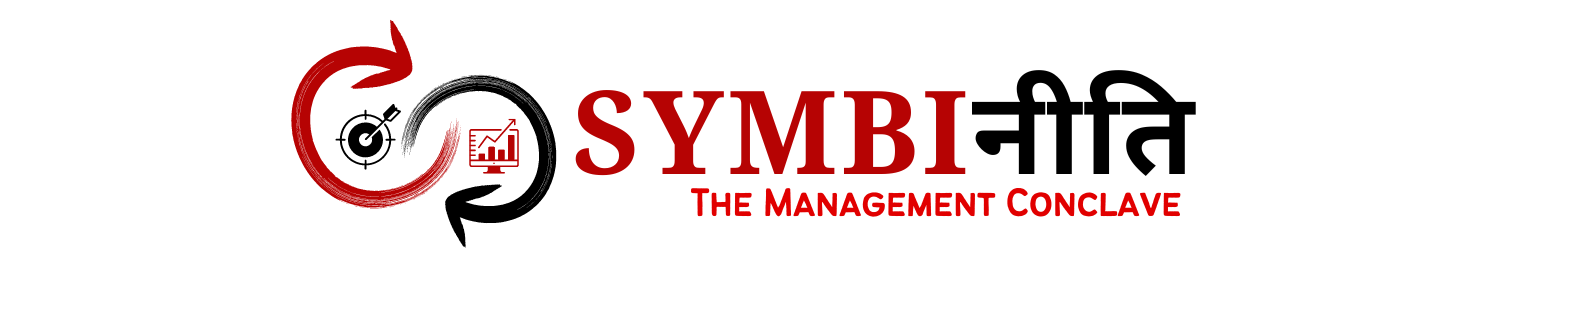 Symbineeti - The Management Conclave
